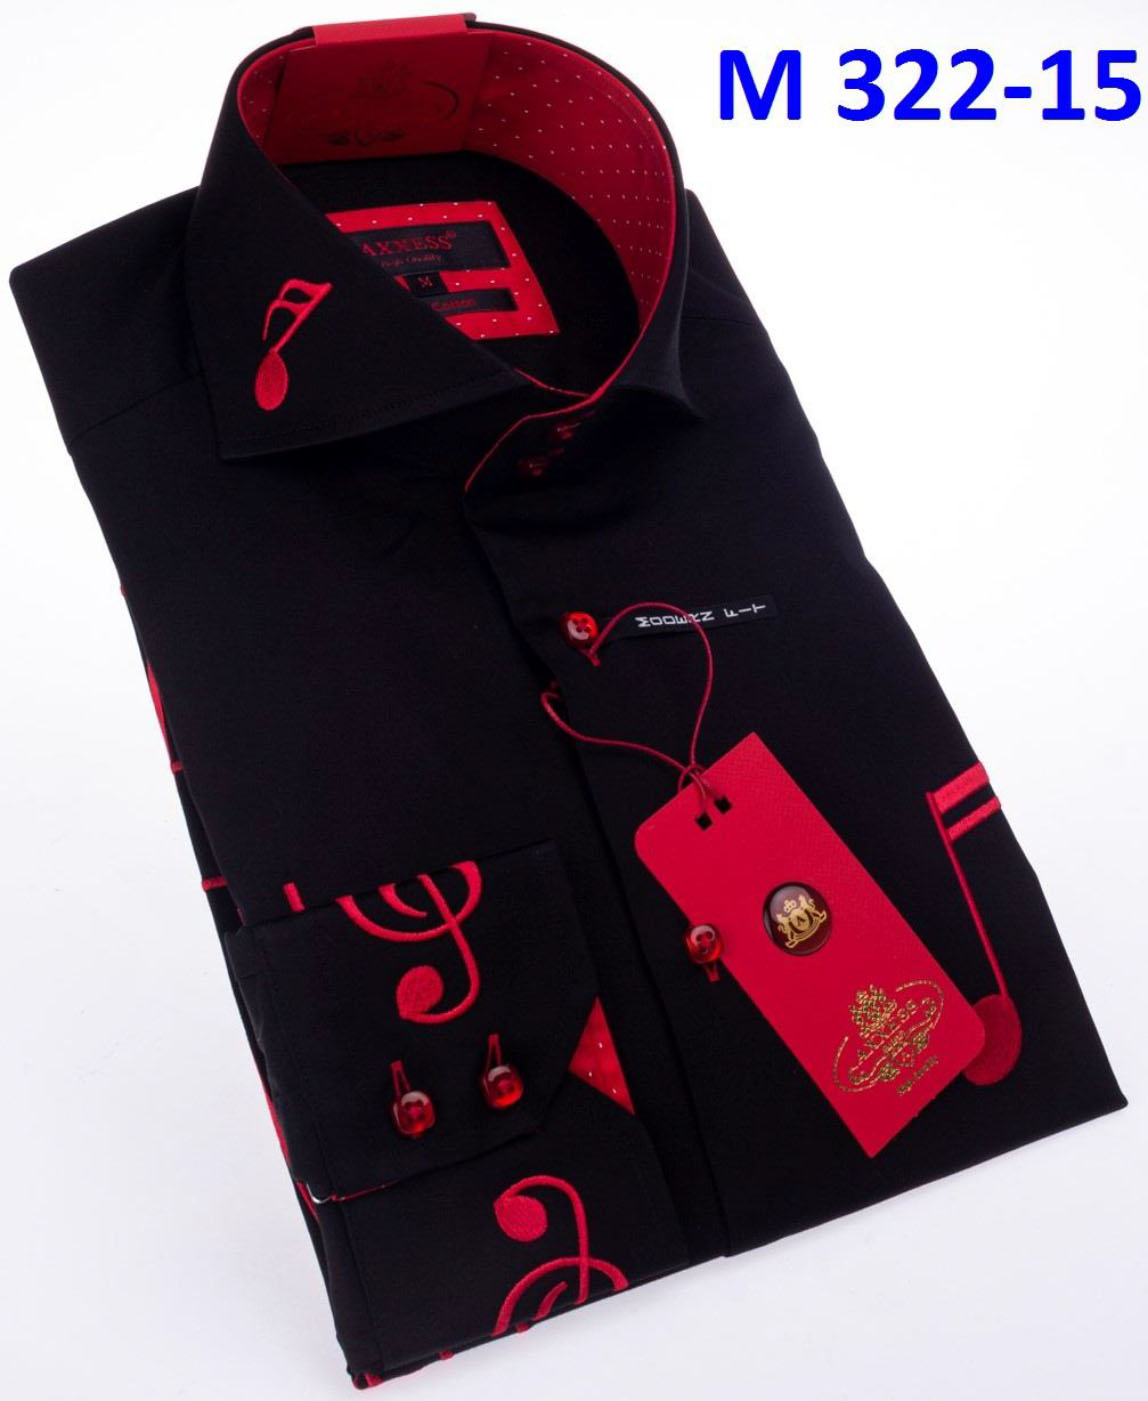 Men Axxess  Egyptian Cotton wrinkle resistant Shirt High Collar 518-18 Red Dots 